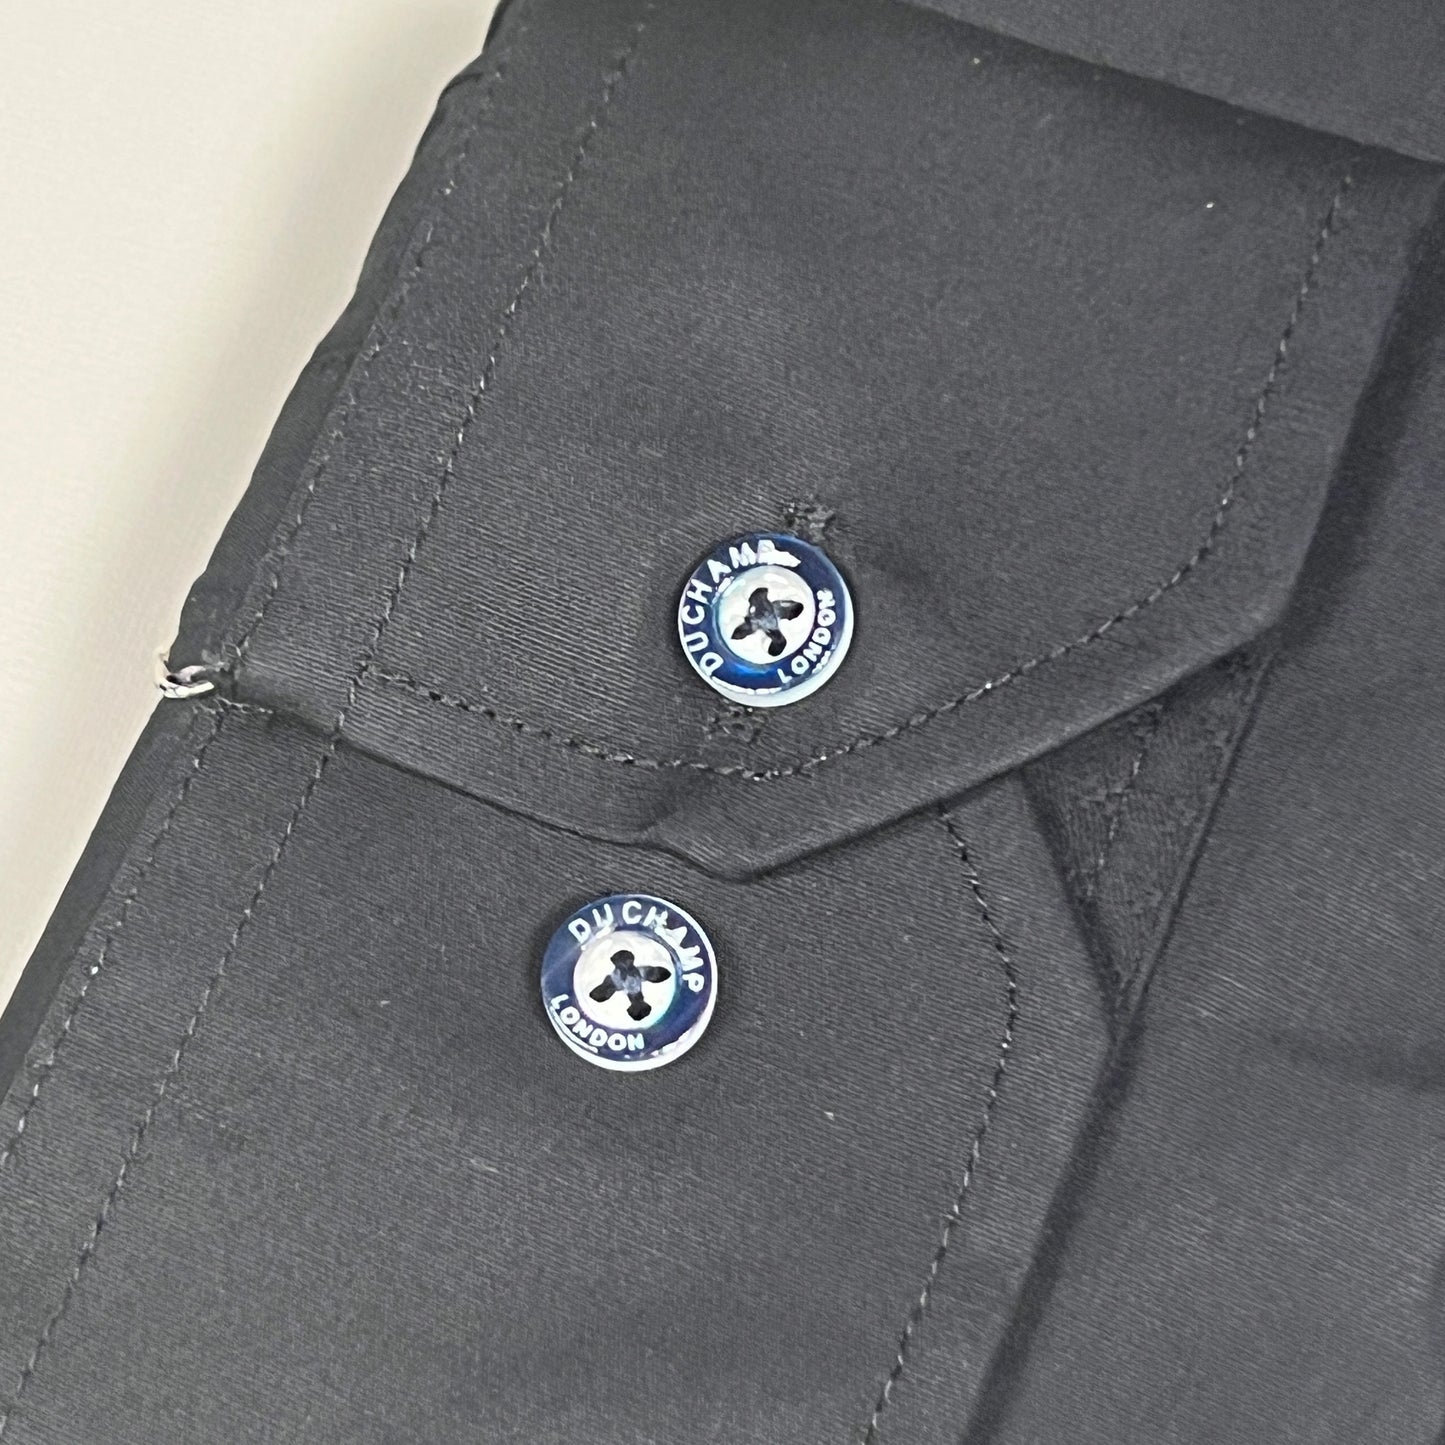 DUCHAMP LONDON Black Solid Tailored-fit Dress Shirt Men's Sz XL / 43 / 17 (New)